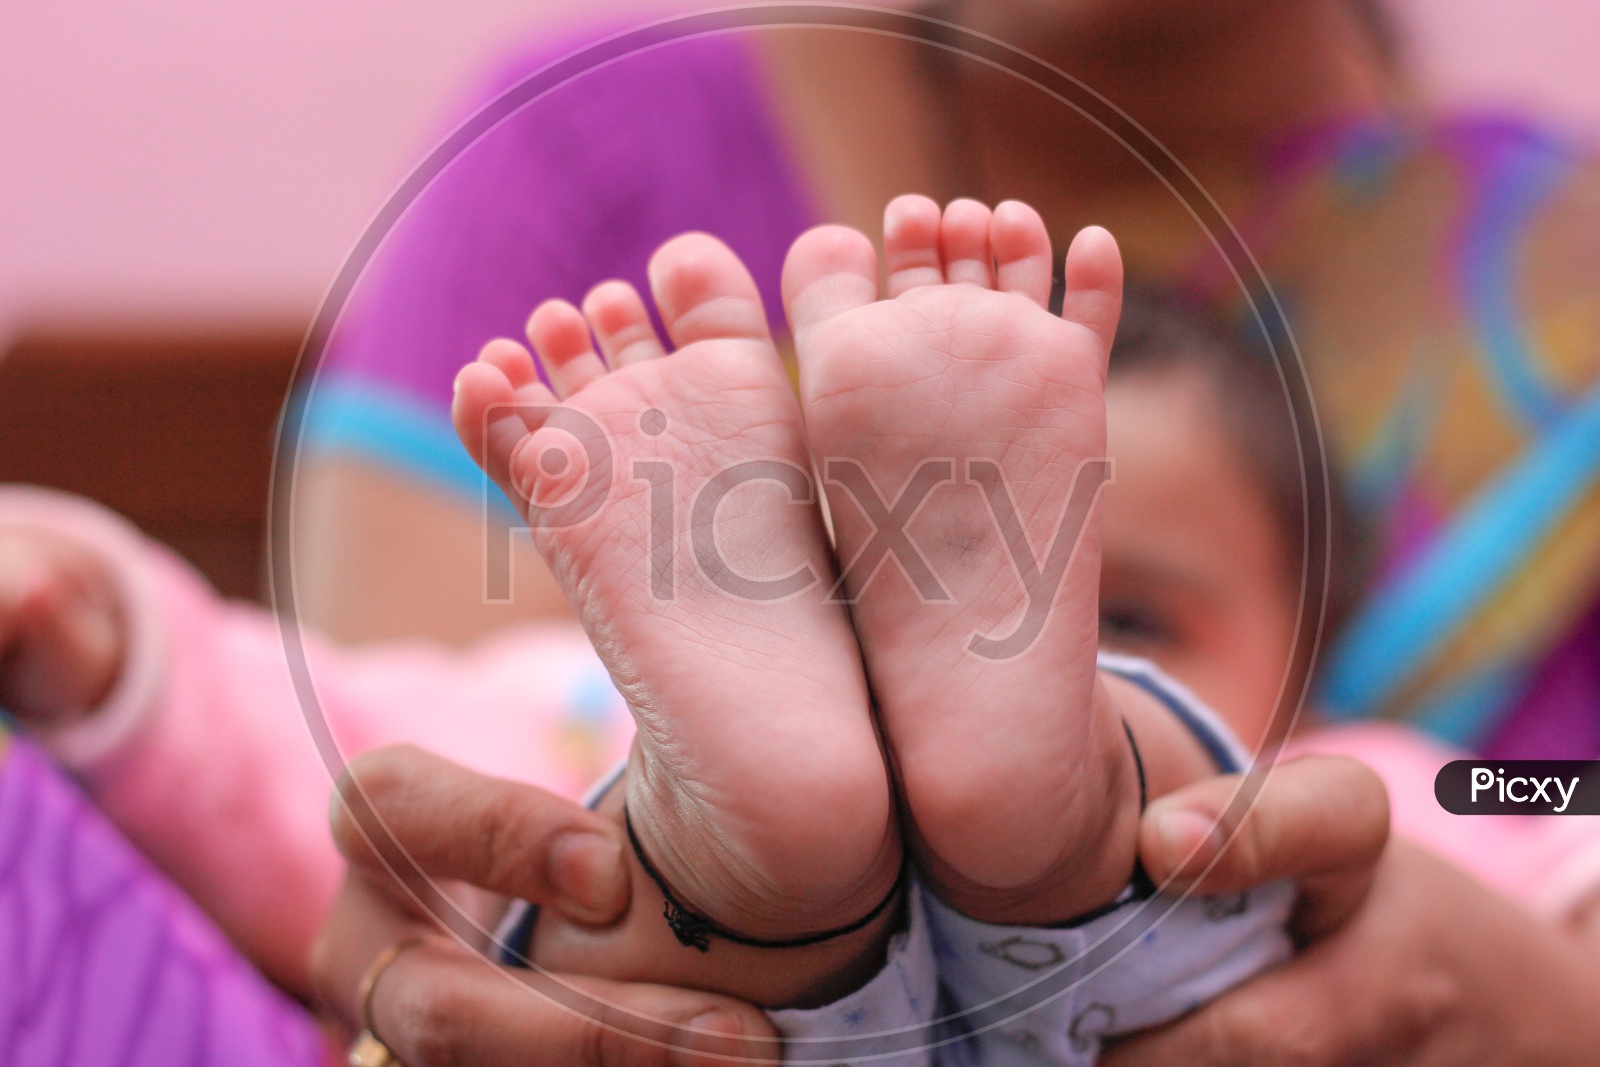 Indian Baby Legs Closeup Shot